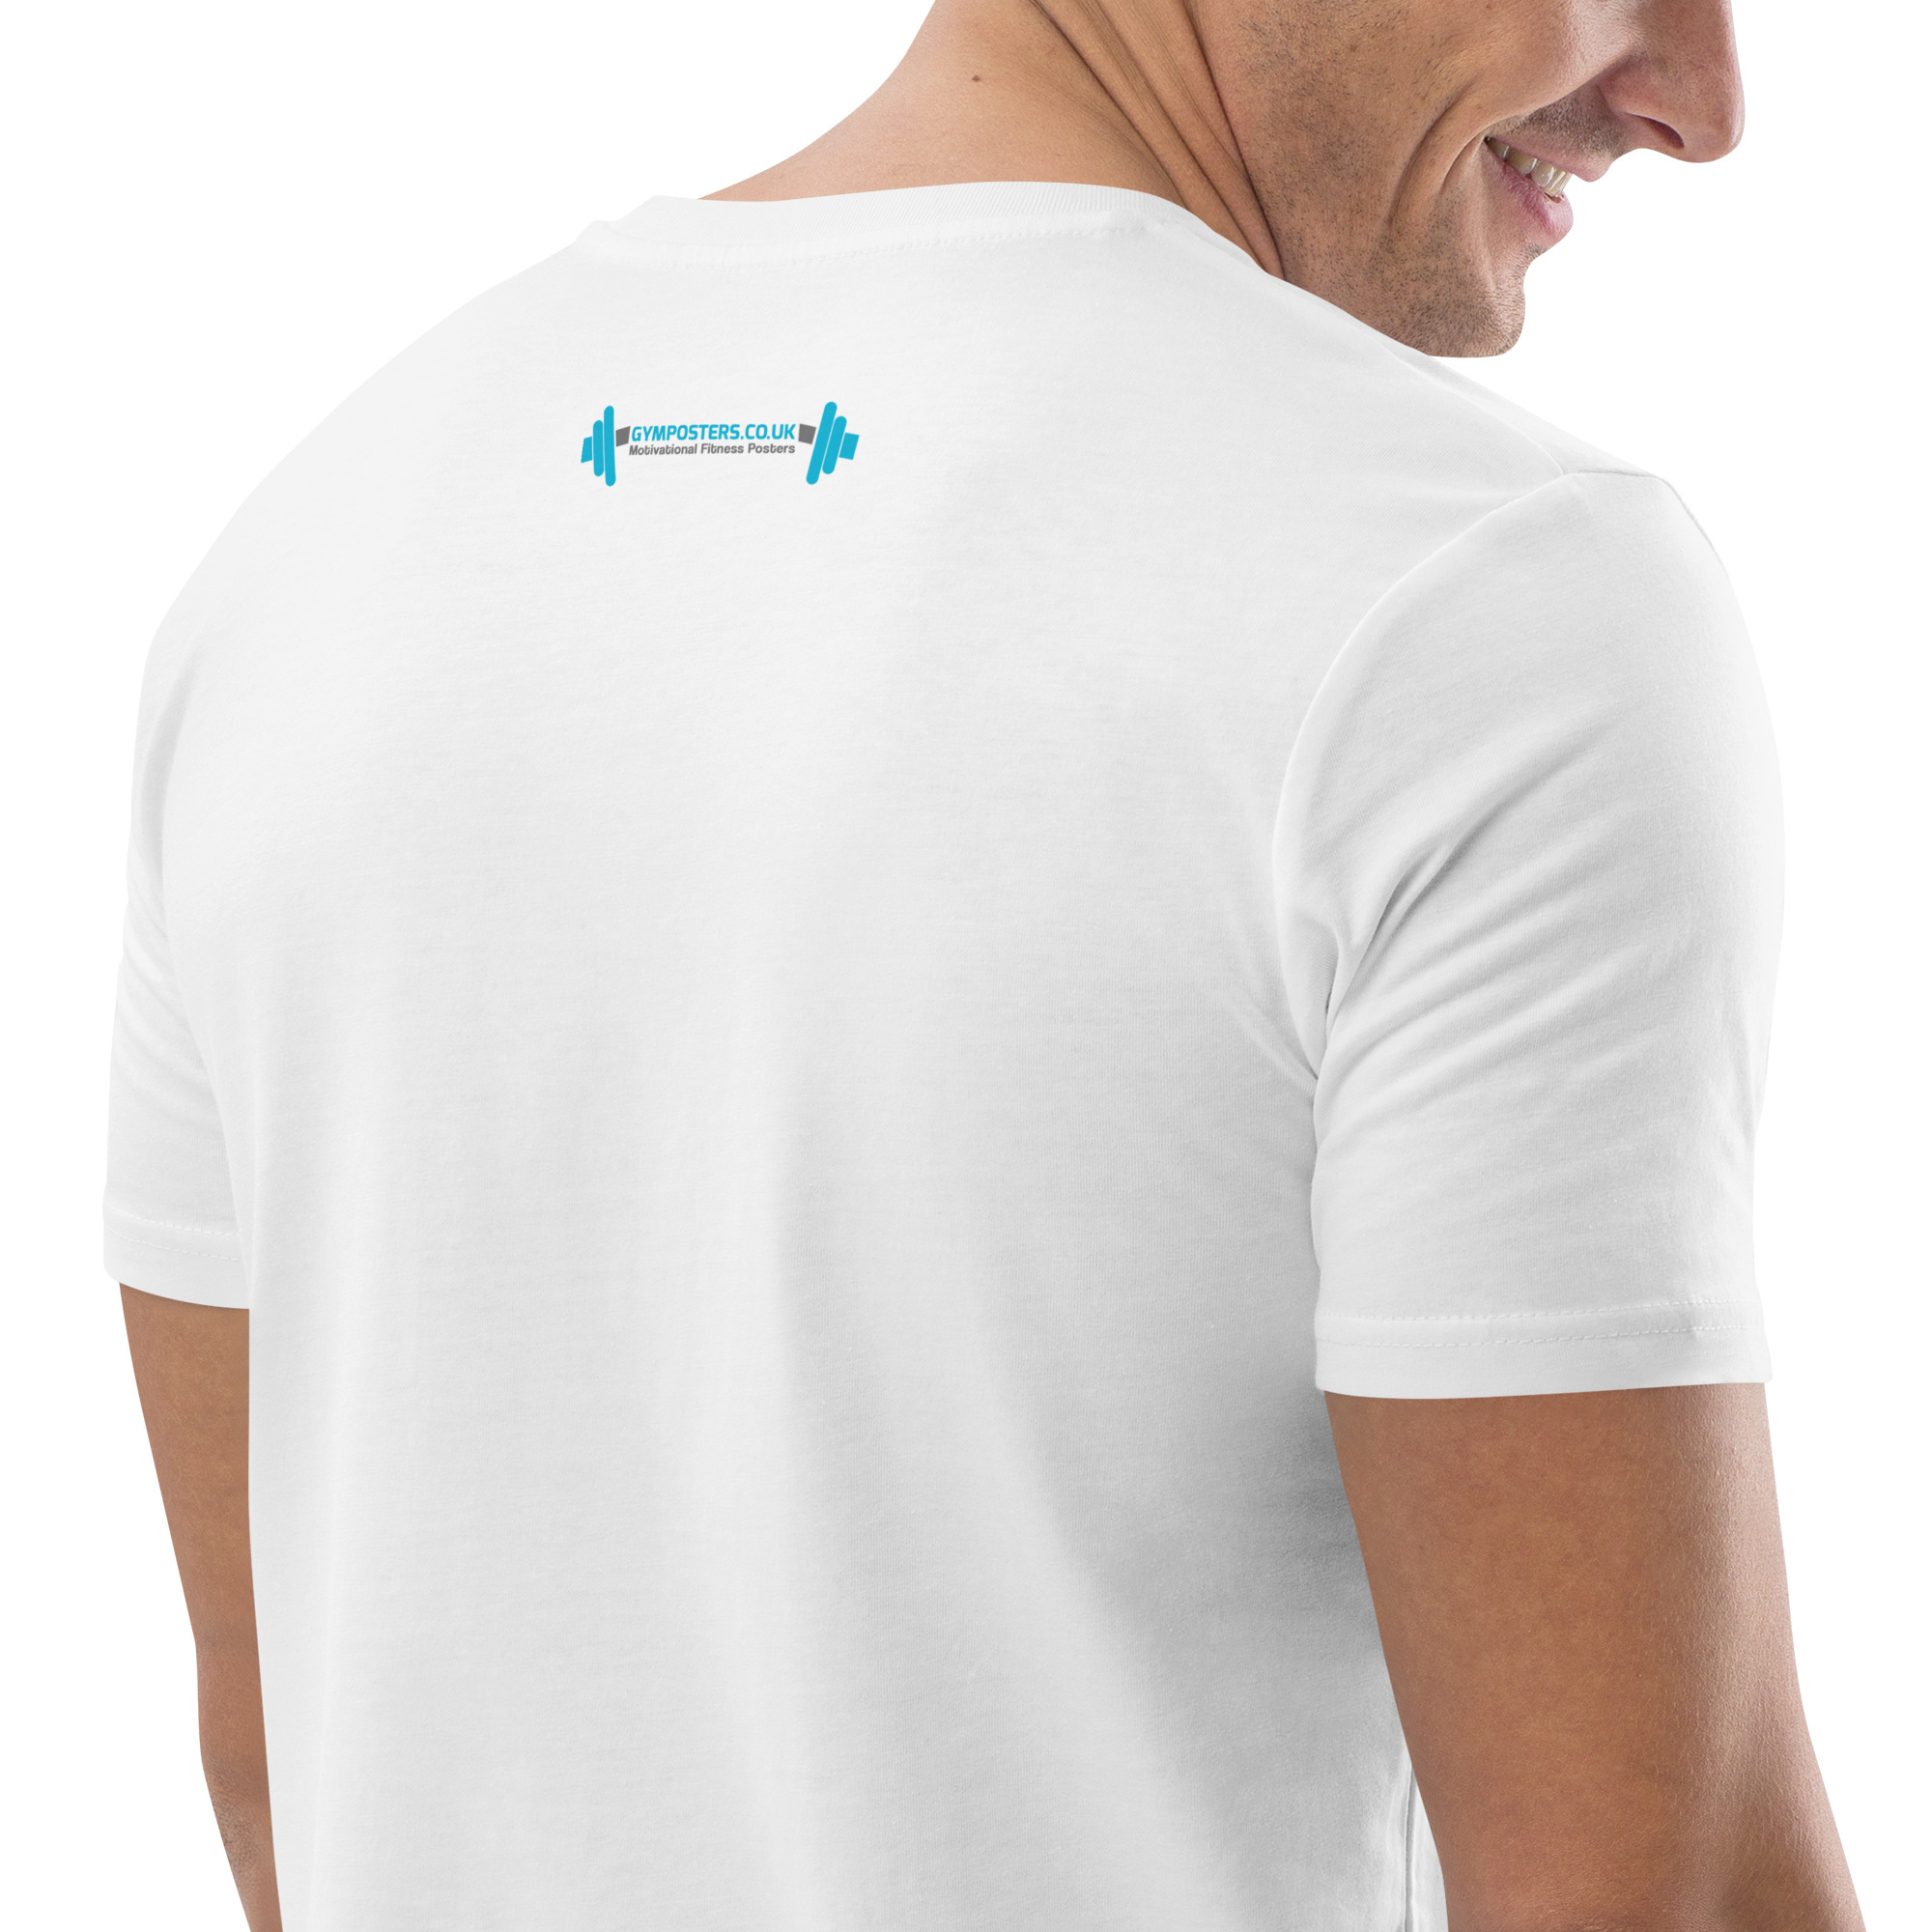 unisex-organic-cotton-t-shirt-white-zoomed-in-3-65784ad54cd94.jpg